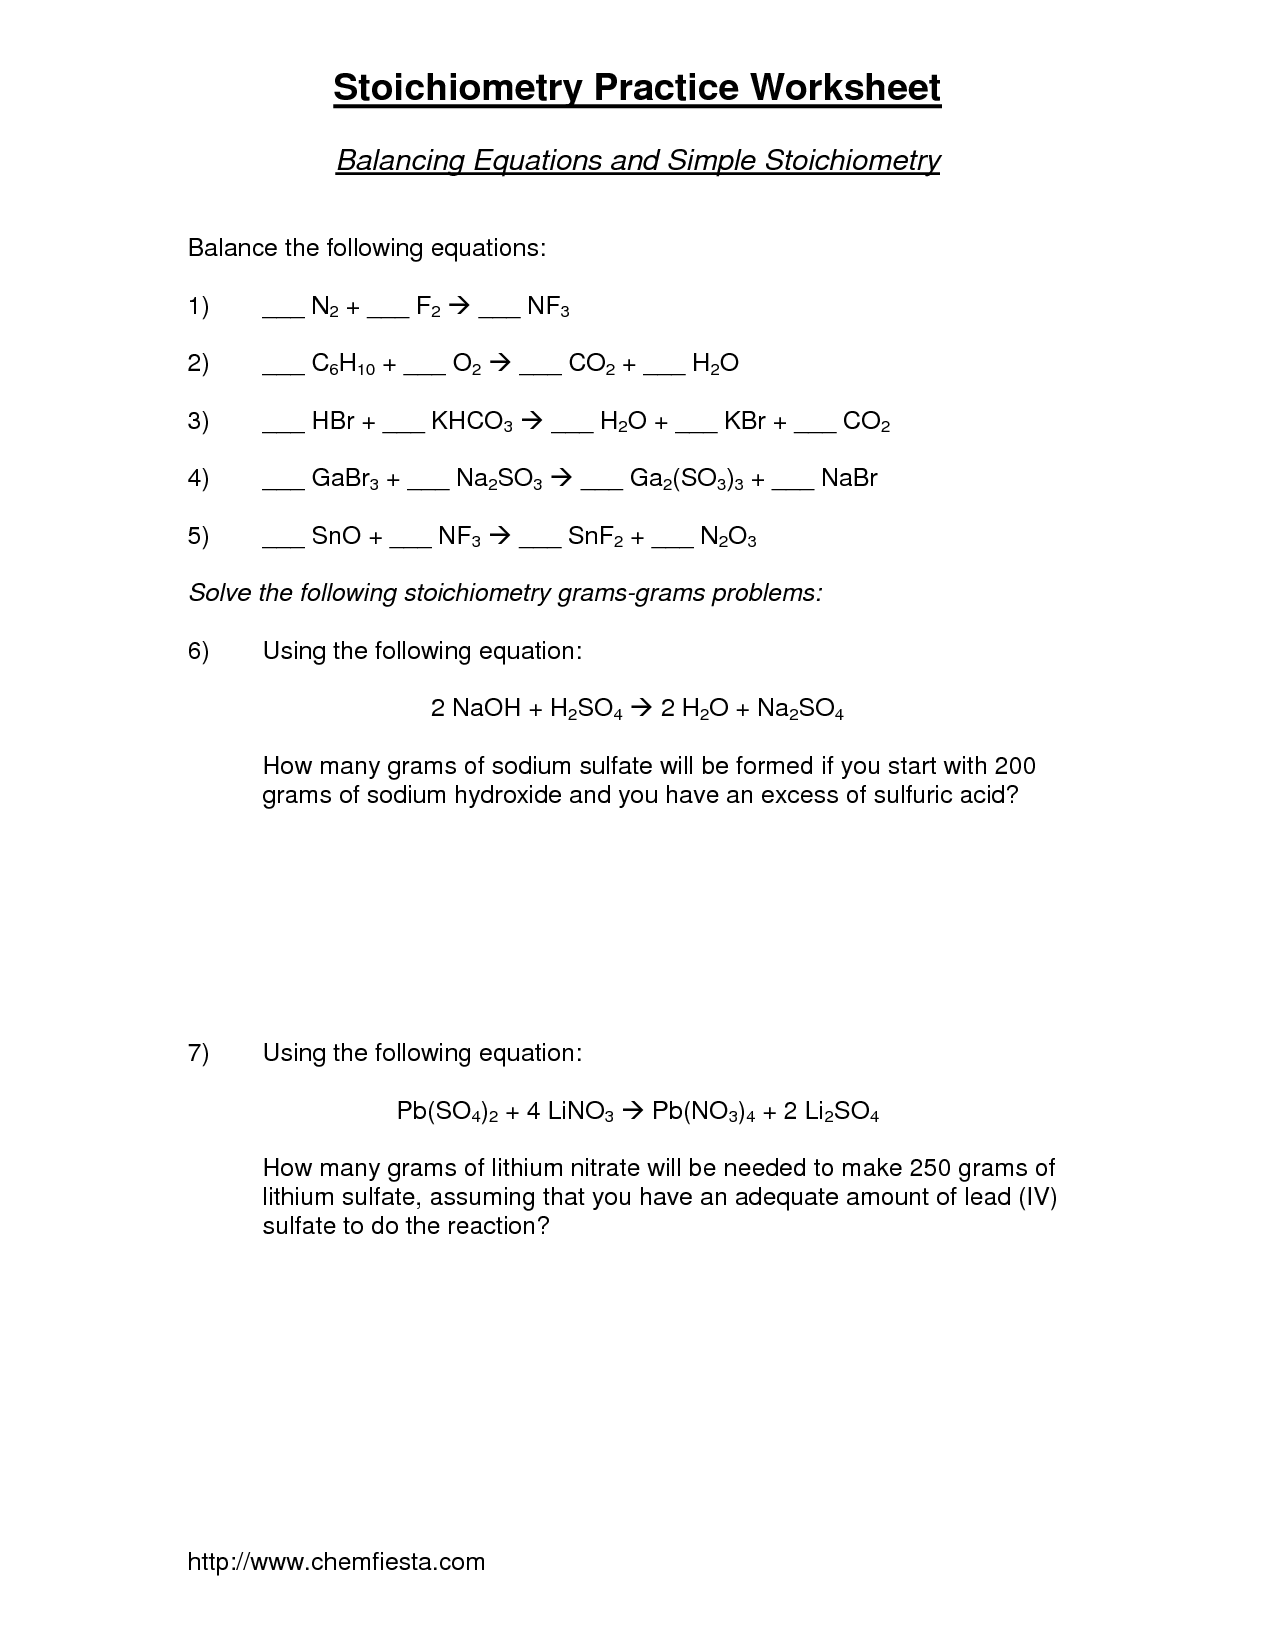 Stoichiometry and Balancing Equation Worksheet Image